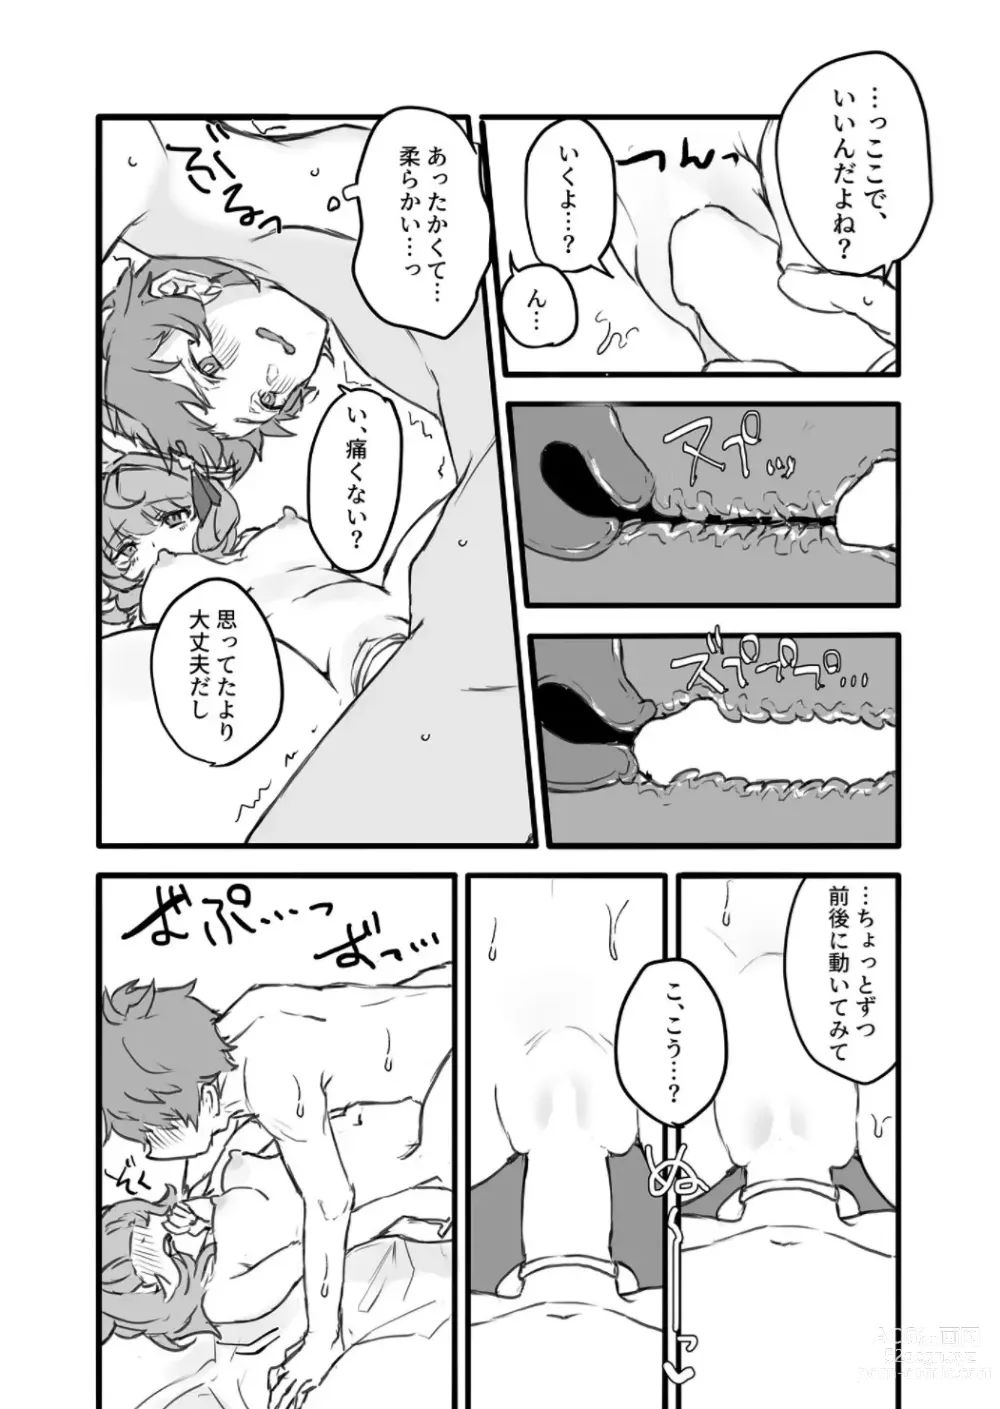 Page 13 of doujinshi Kore, Nani ka Shitteru?